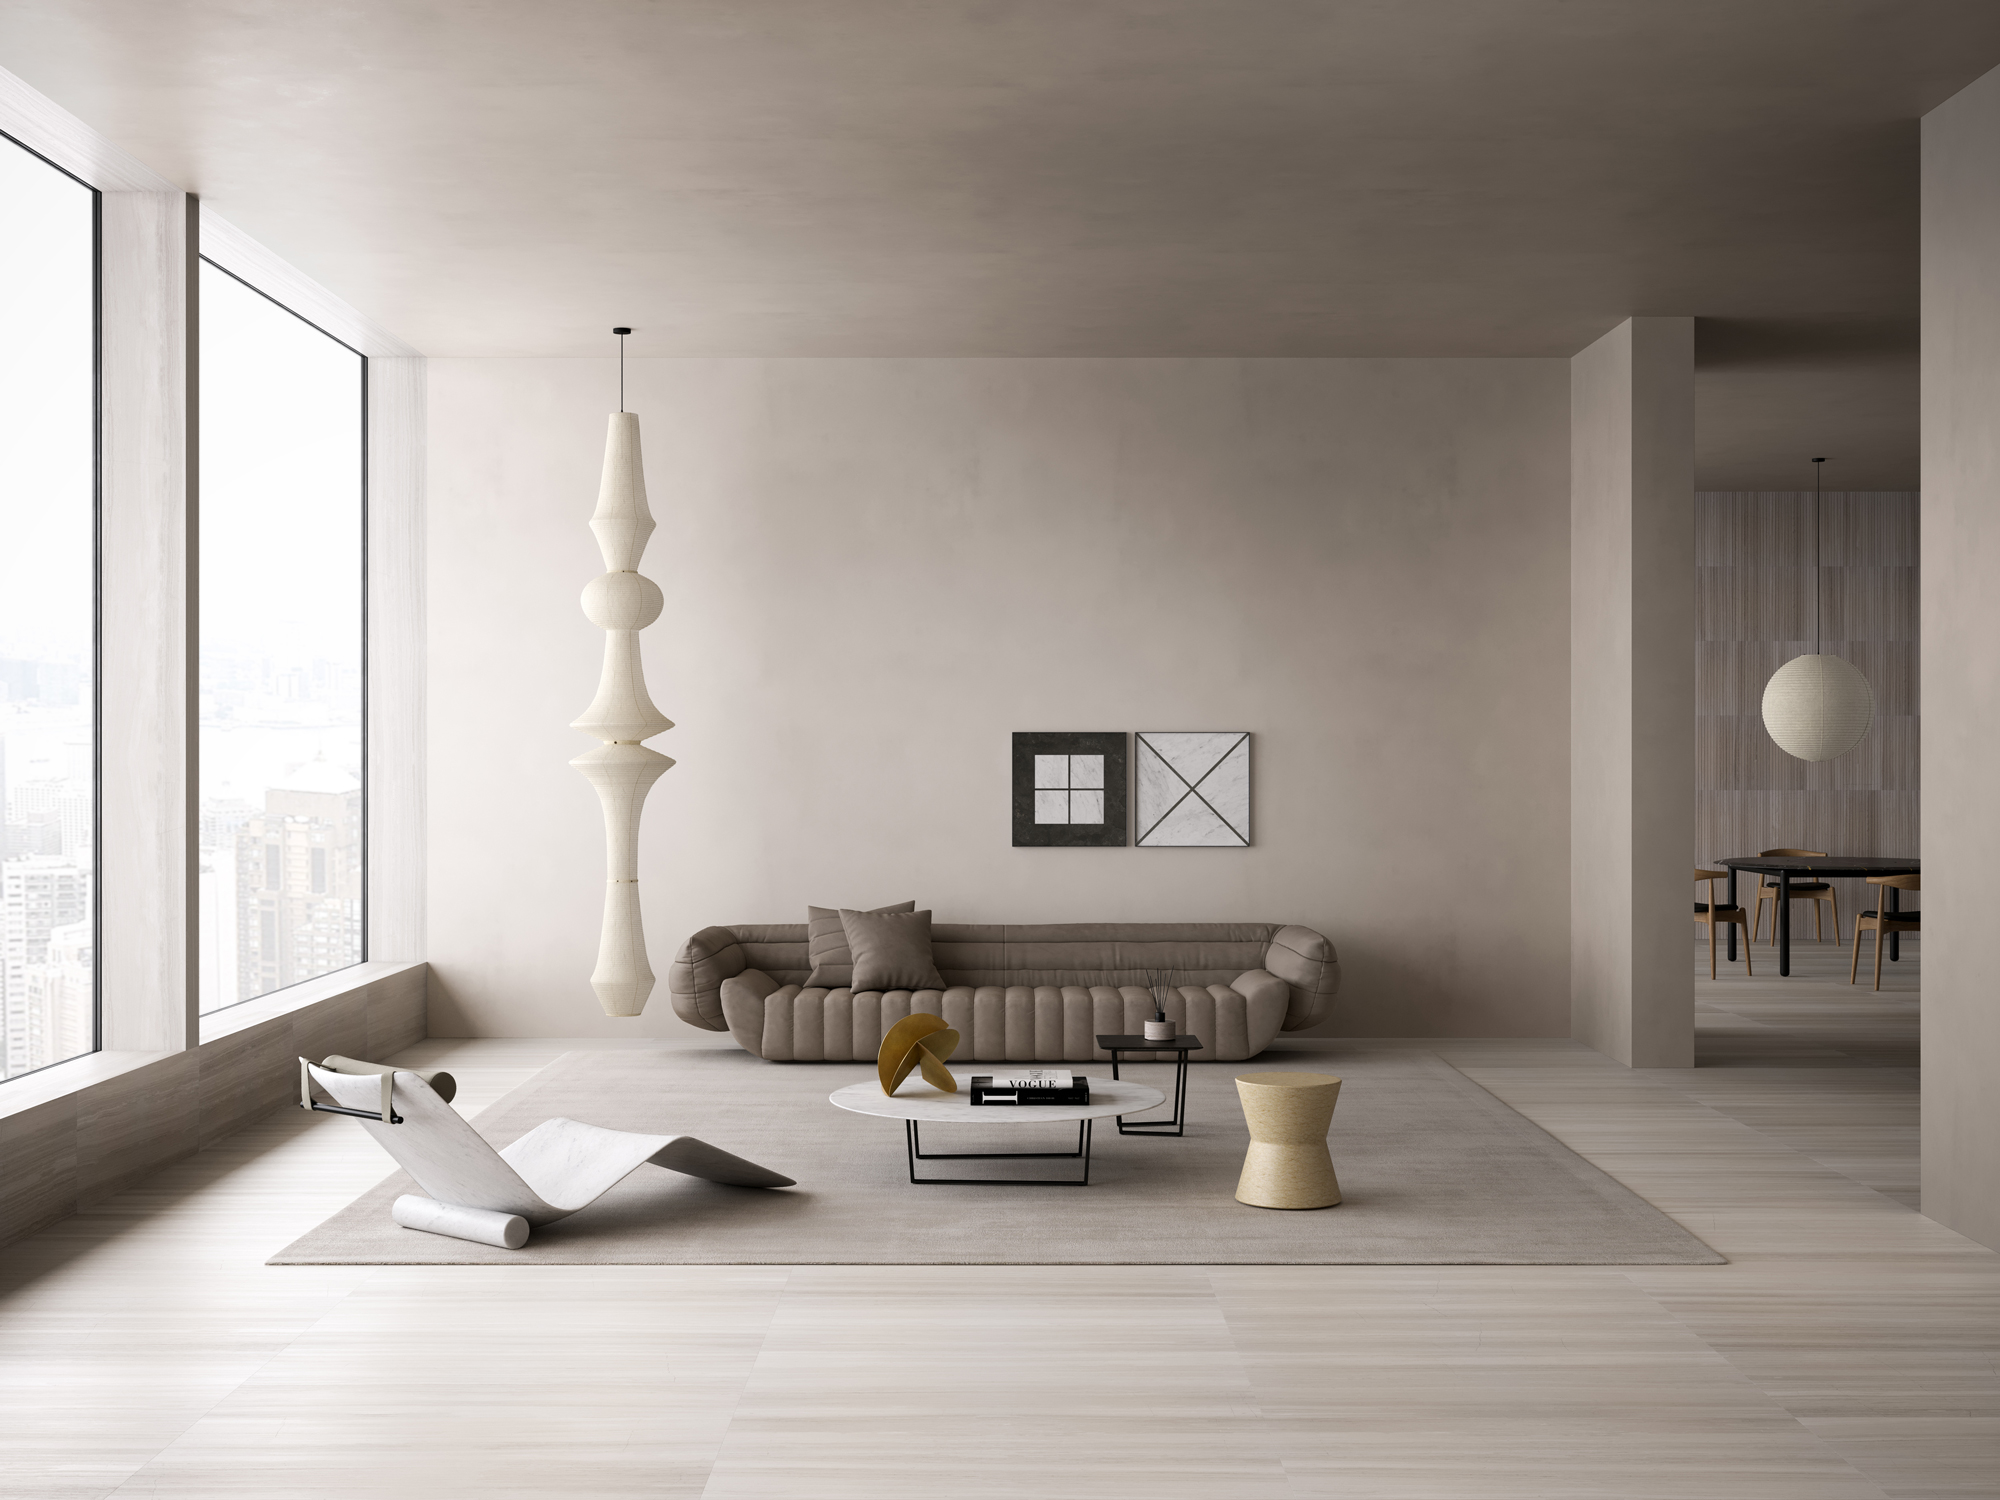 What is minimalist interior design style?